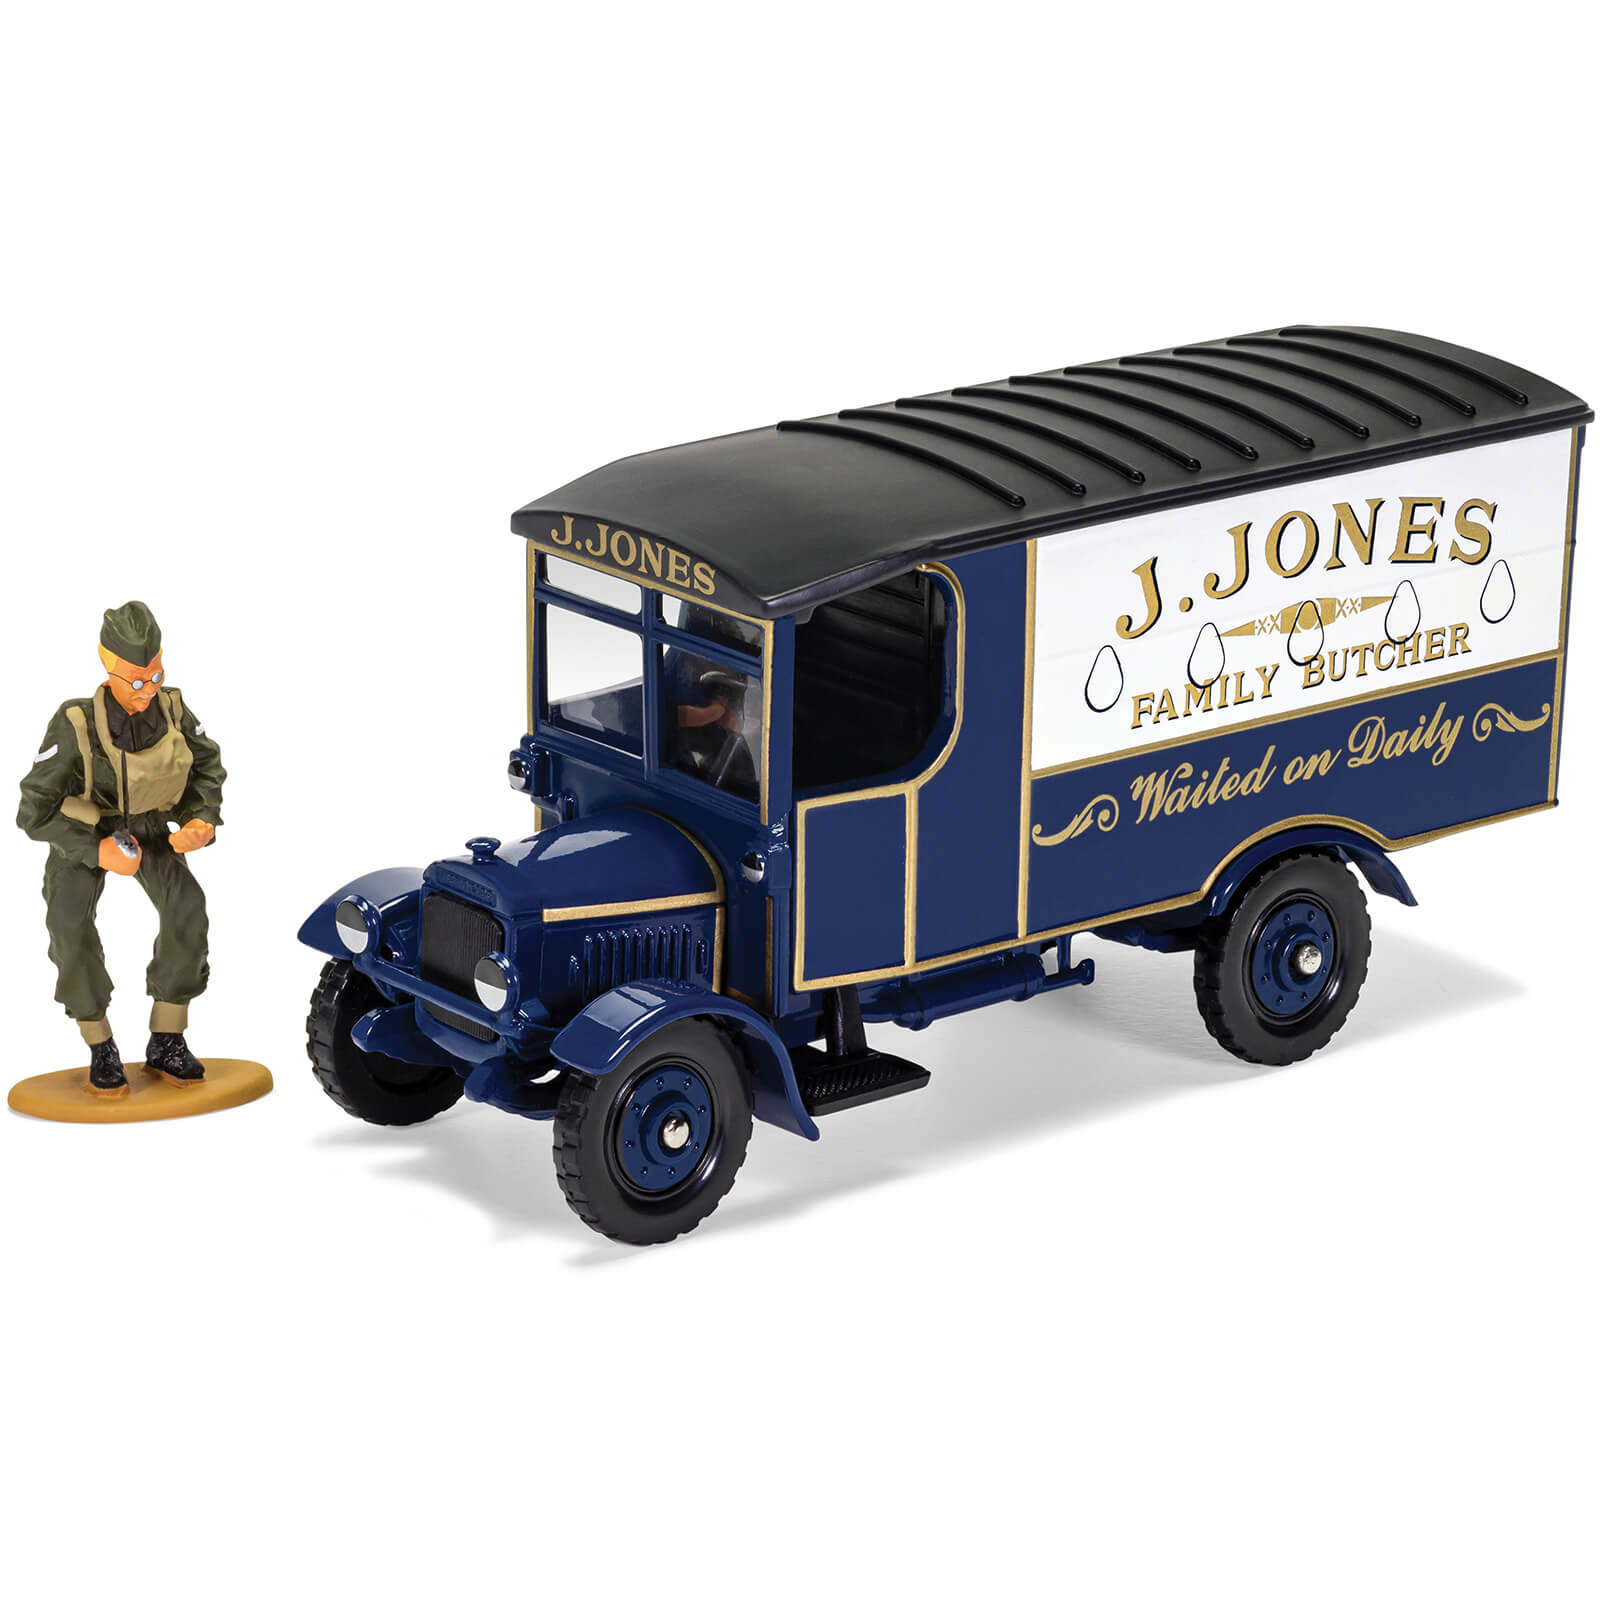 Image of Dads Army TV Series J. Jones Thornycroft Van and Mr Jones Figure Model Set - Scale 1:50